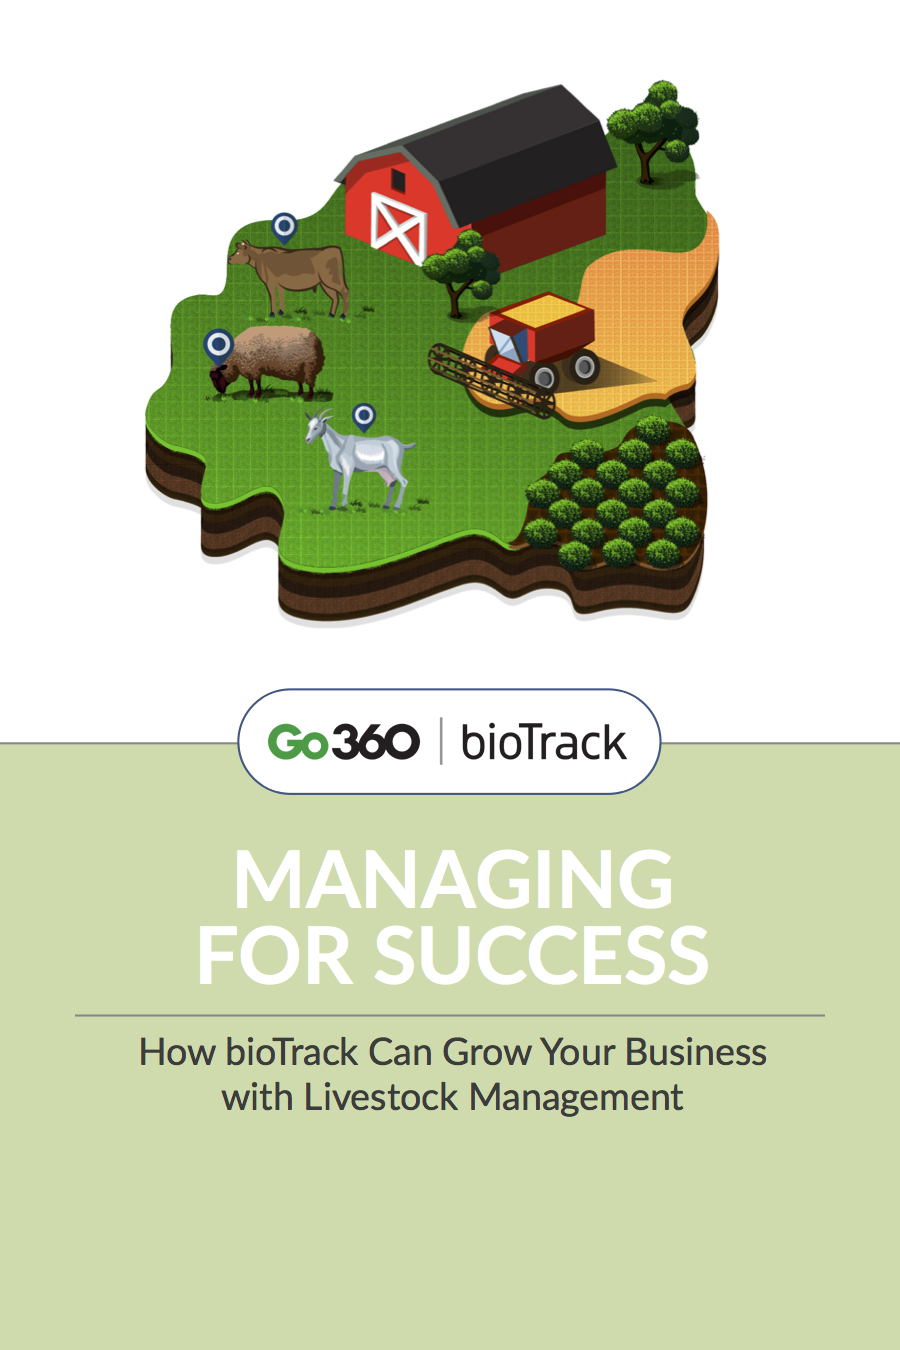 Go360 bioTrack Livestock Management